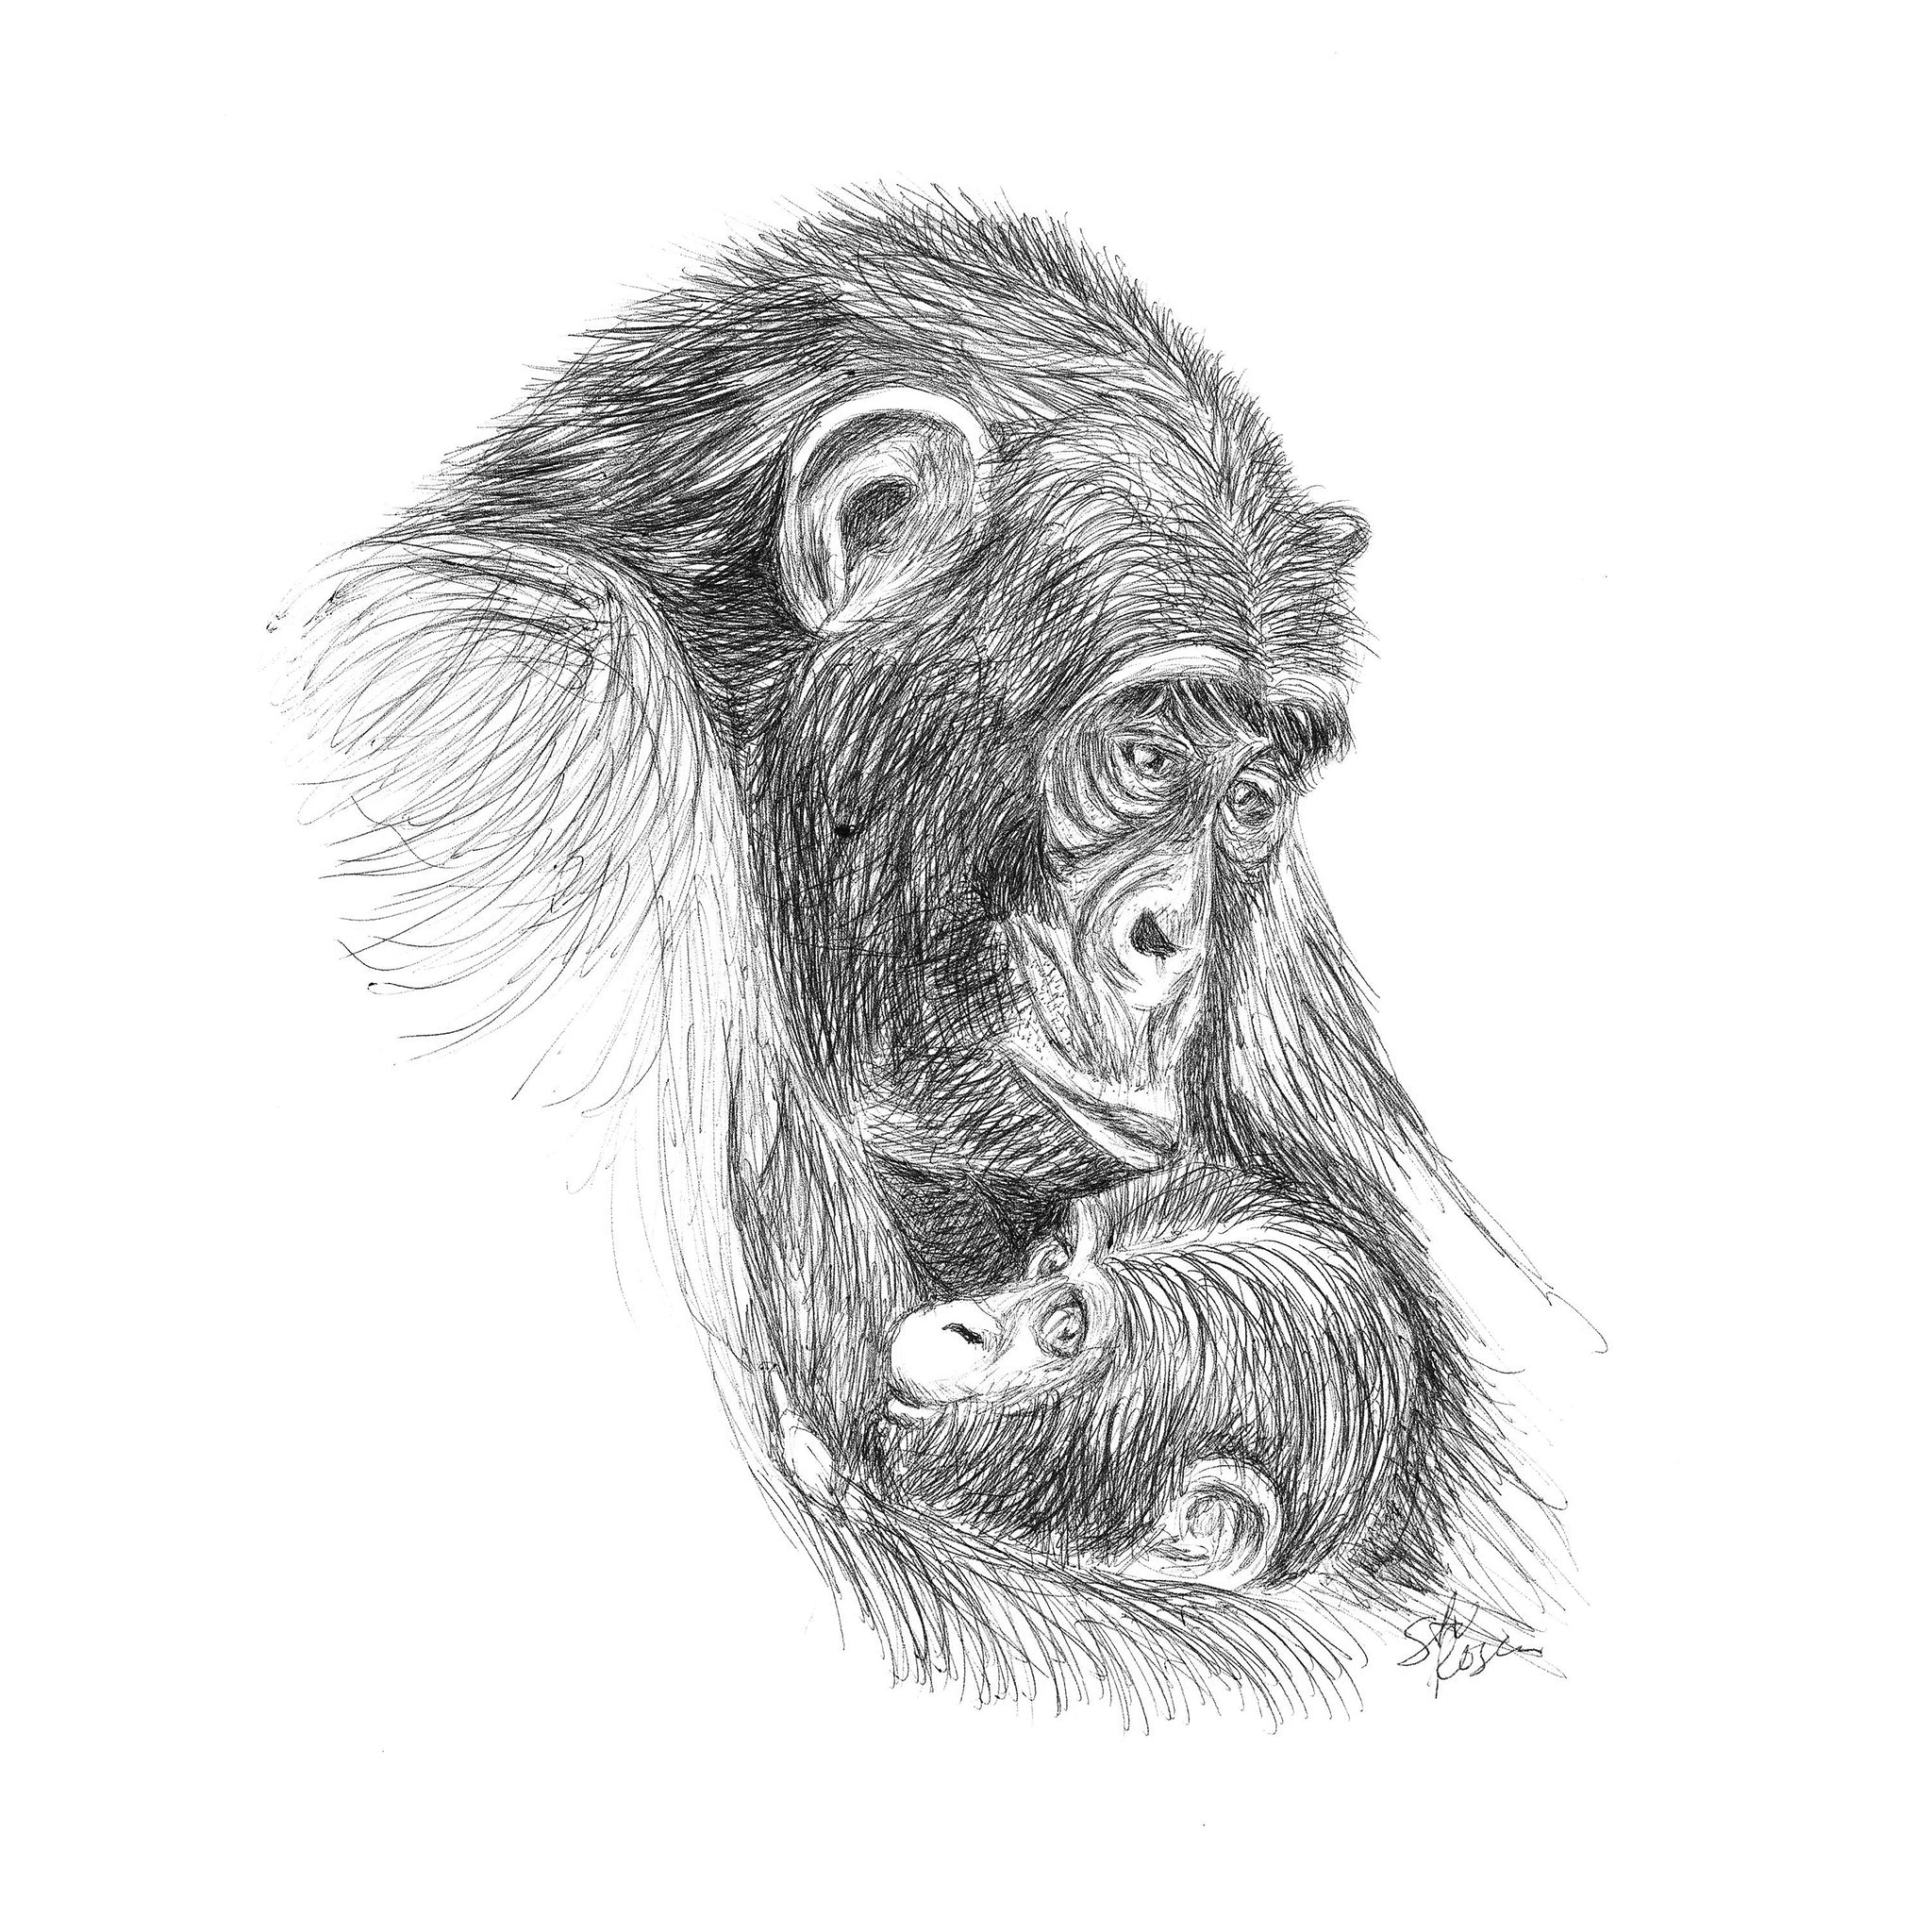 Ape - "A Mother's Love"